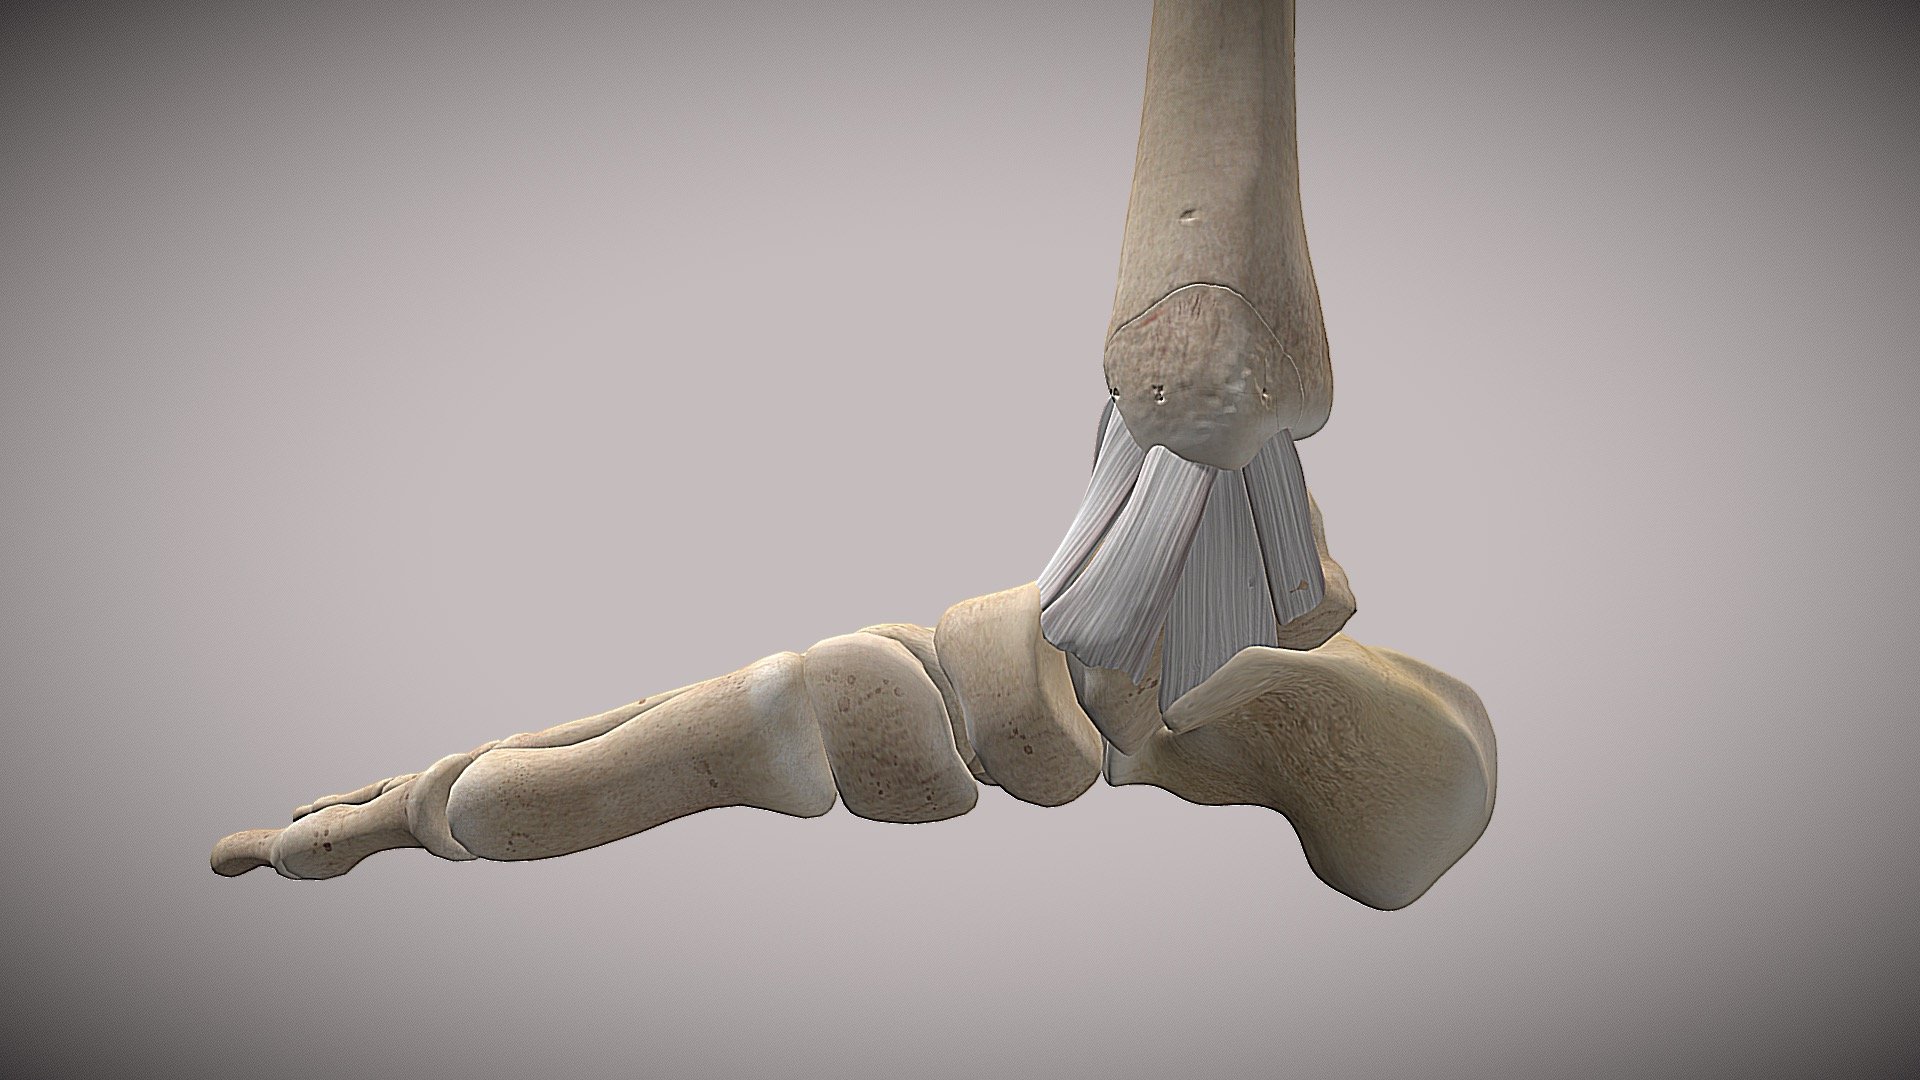 Ankle Anatomy SKETCHFAB - 3D model by as17345 3d model